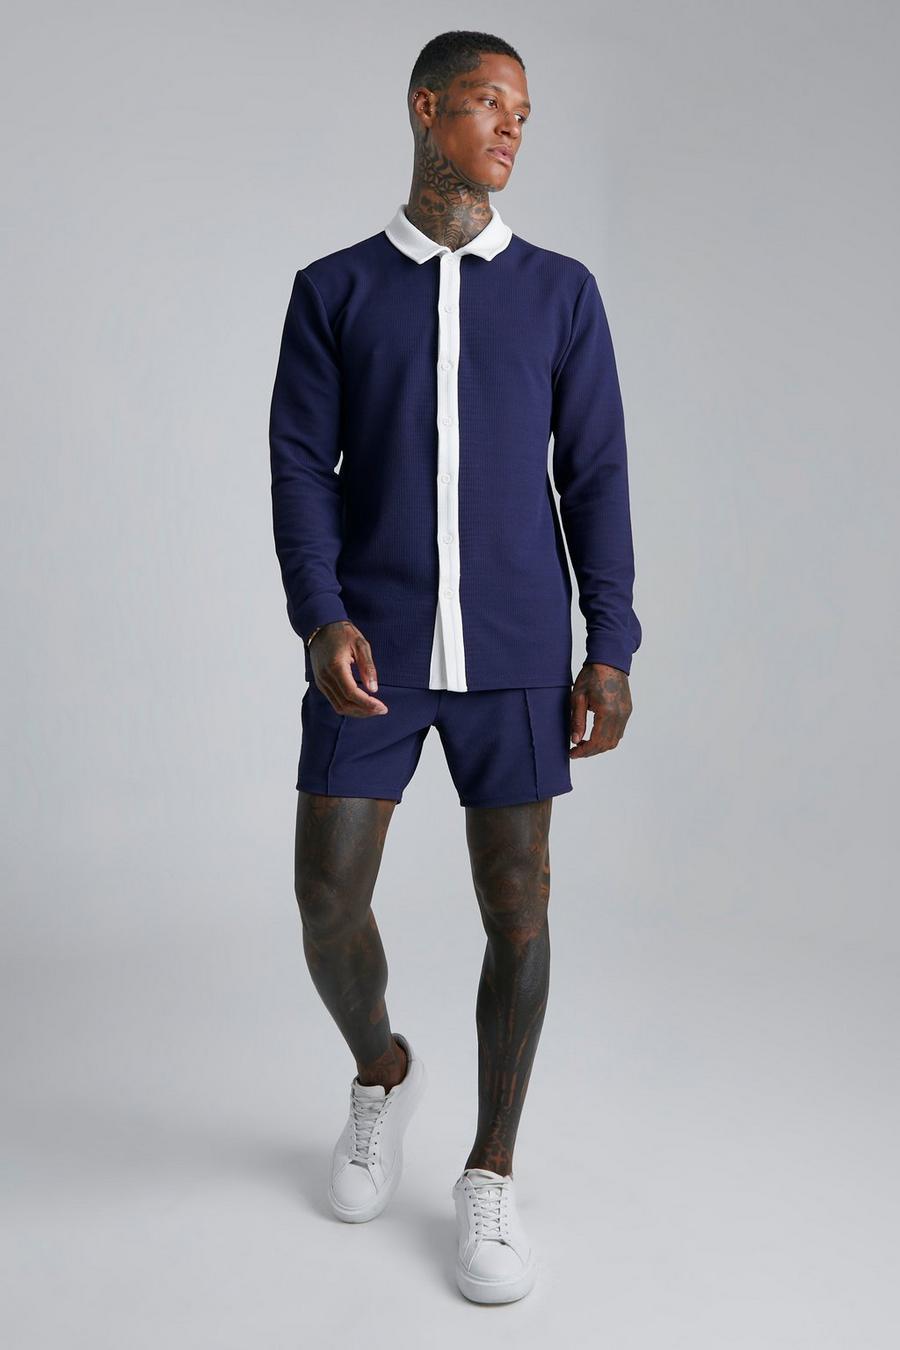 Pantalón corto y camisa texturizada de manga larga y tela jersey, Navy azul marino image number 1